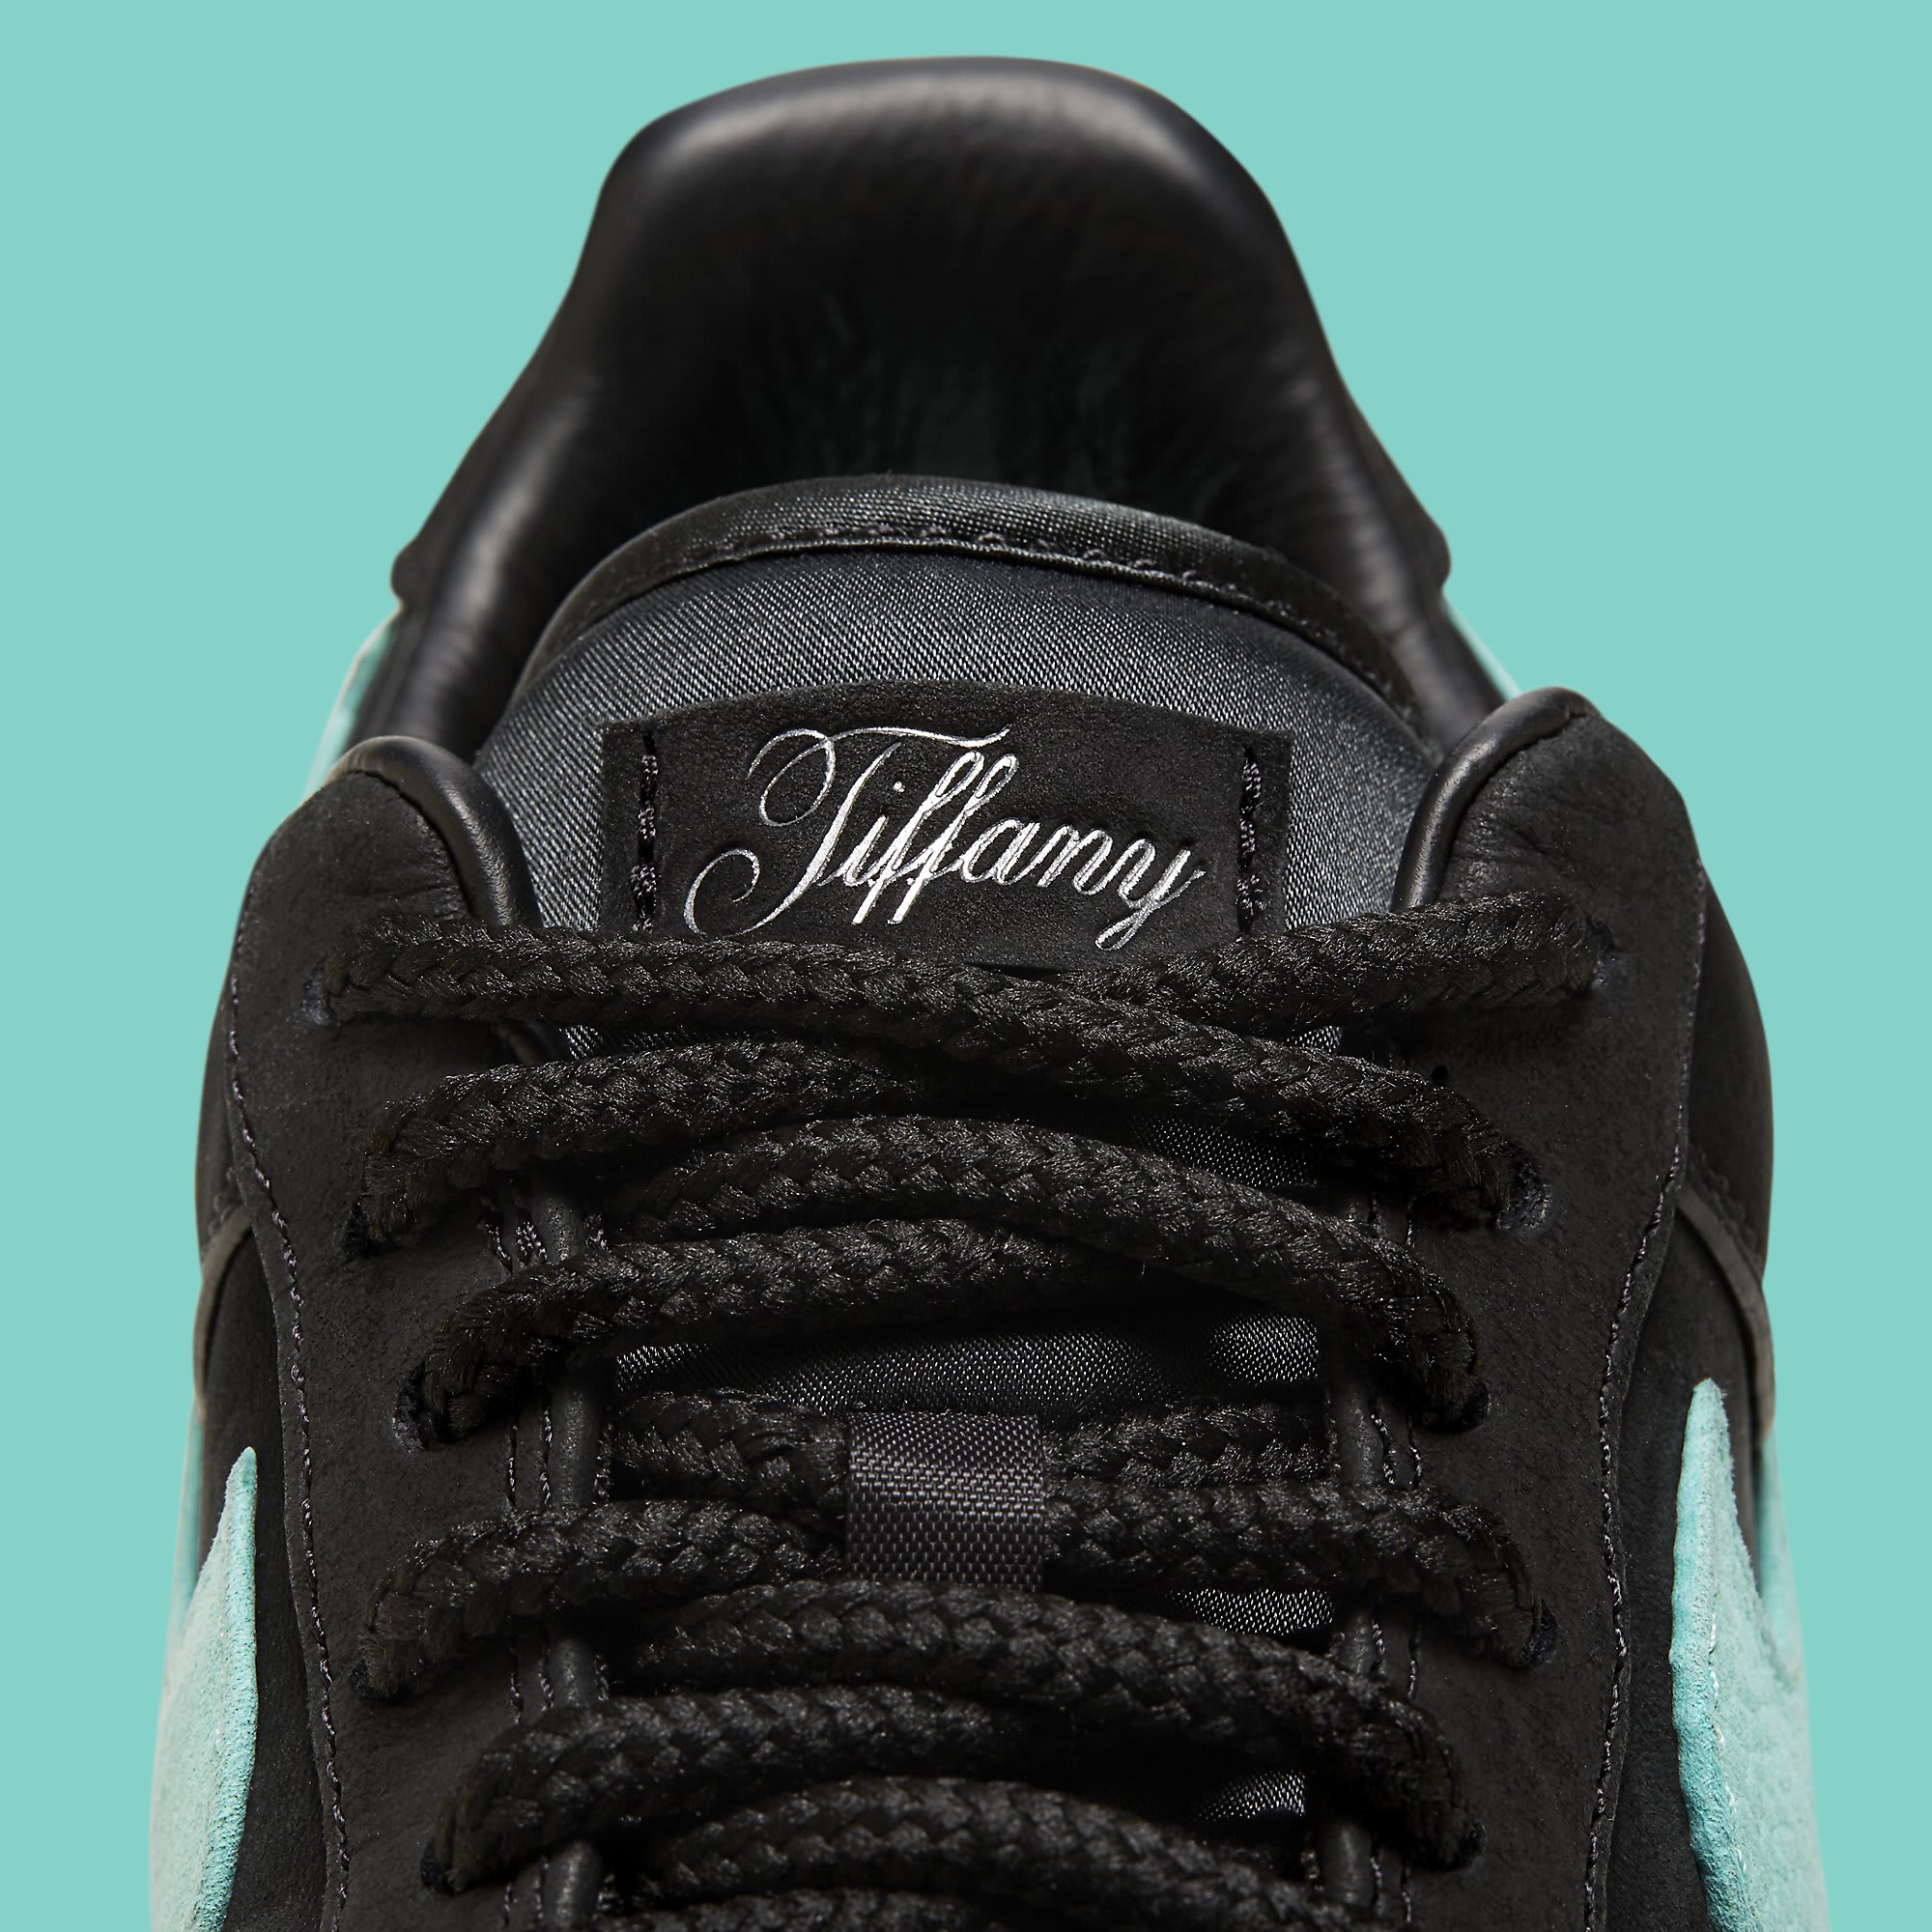 Tiffany & Co. x Nike Air Force 1 Low DZ1382 001 Tongue